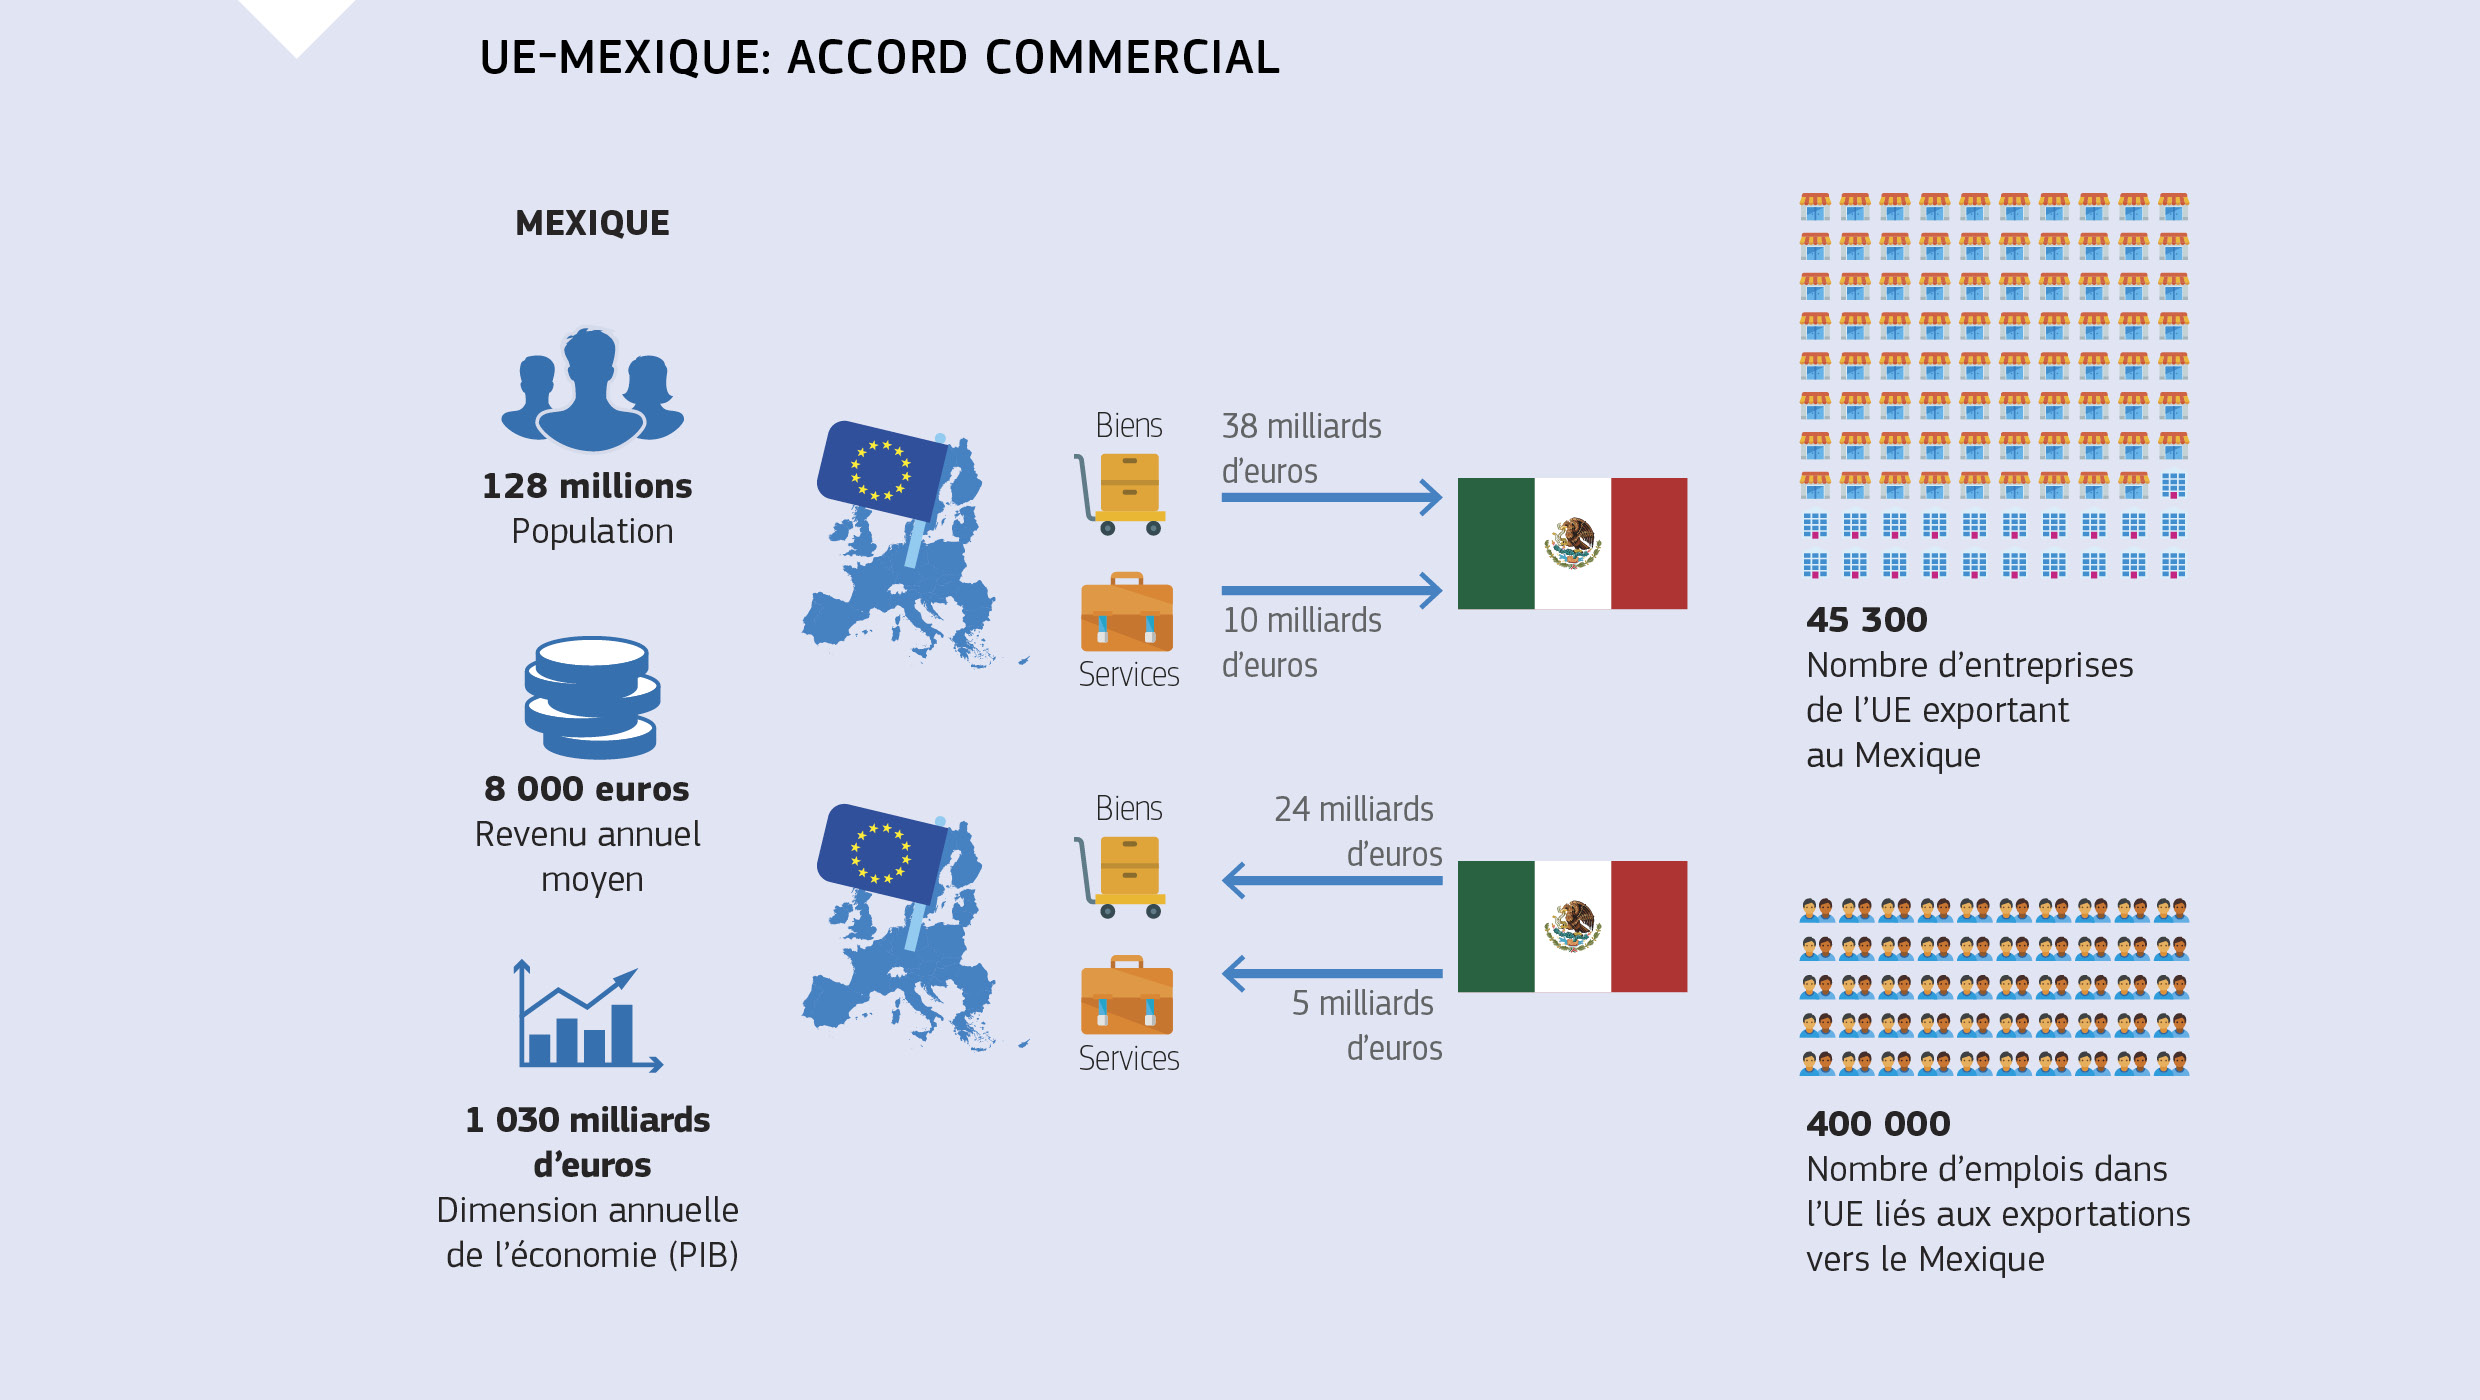 UE-MEXIQUE: ACCORD COMMERCIAL